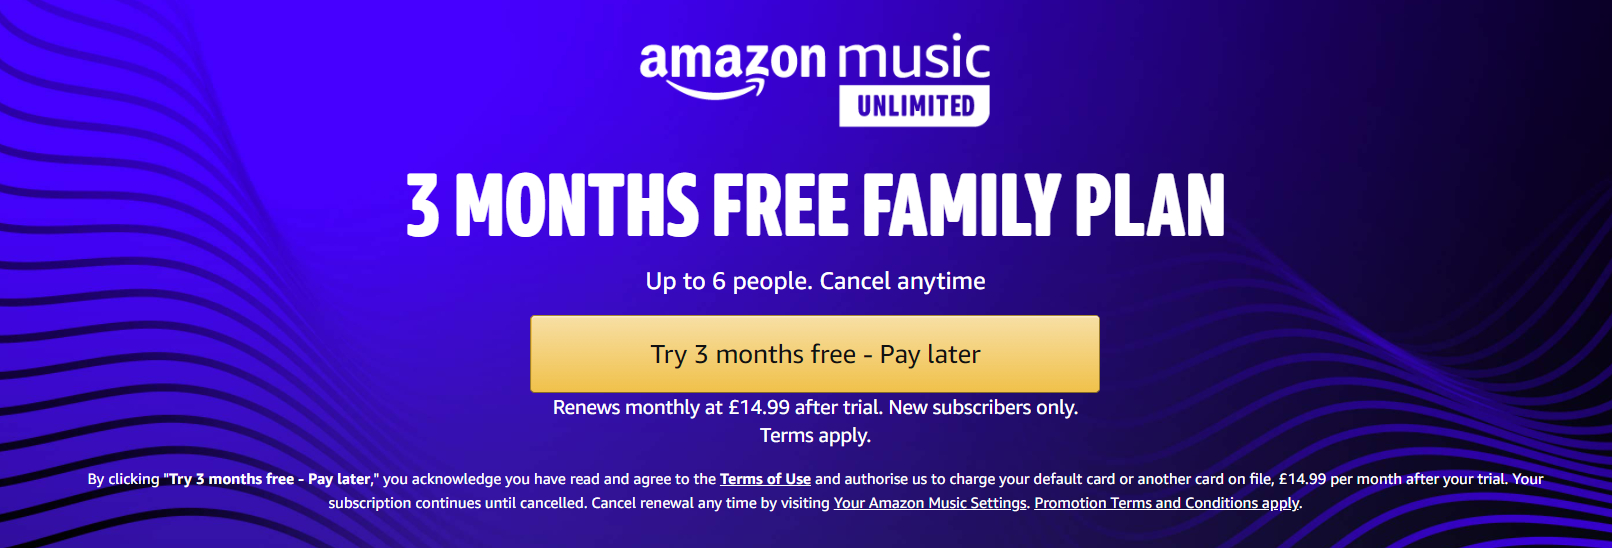 amazon music unlimited family plan